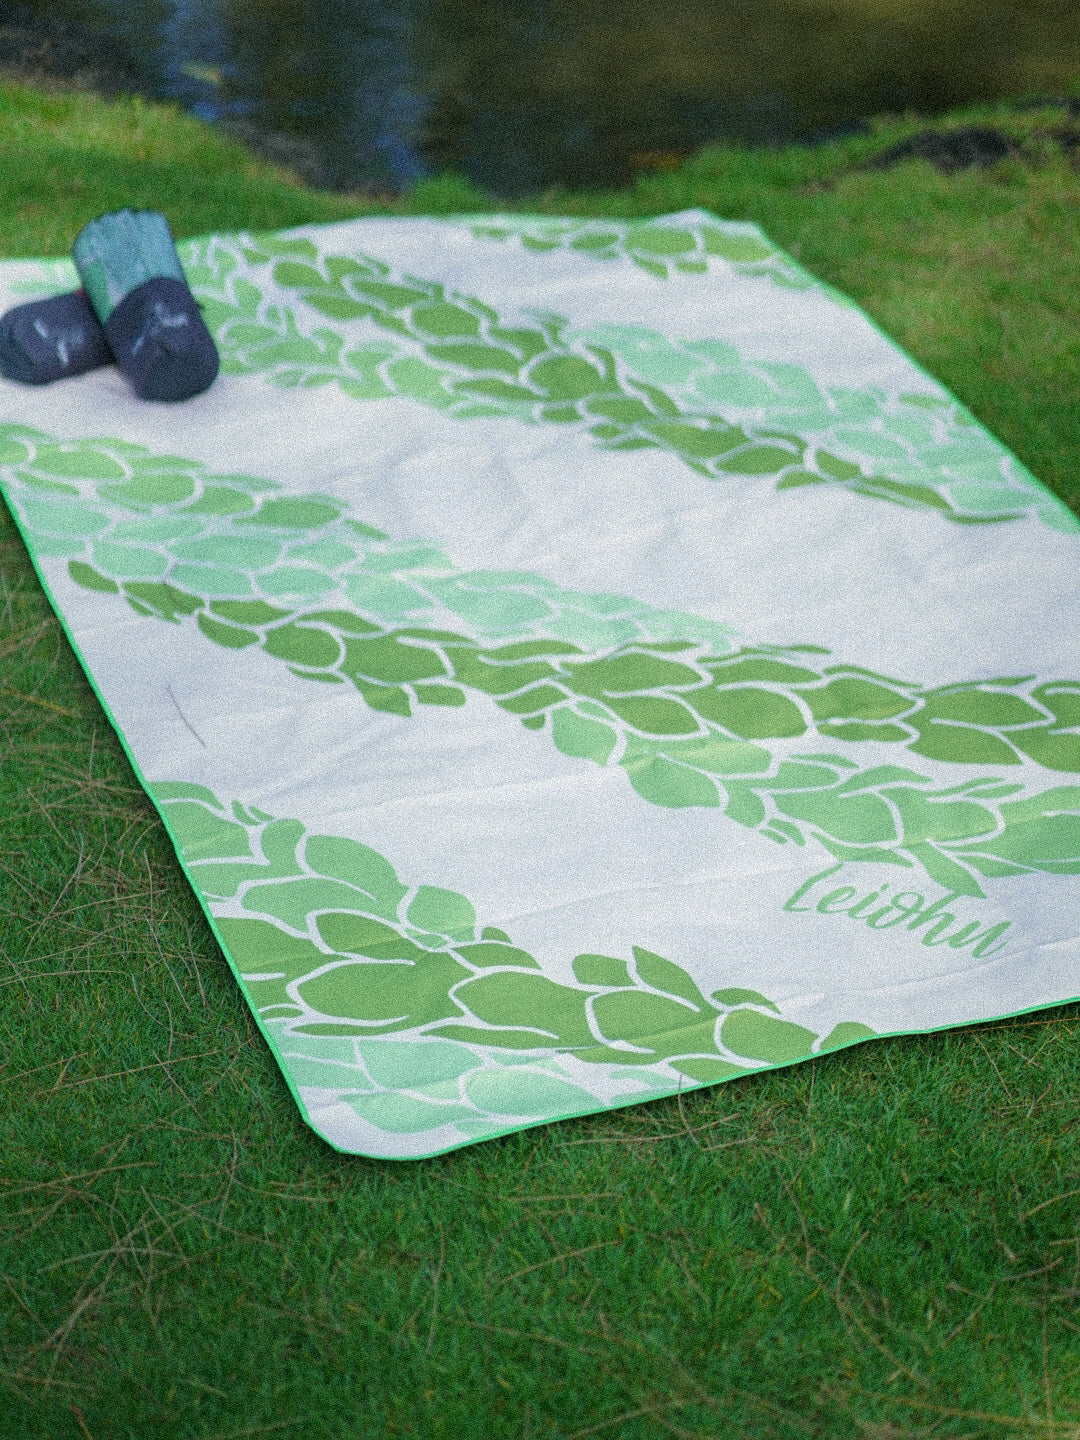 Pop-Up Mākeke - Lei'ohu Designs - Microfiber Beach Towel - Pakalana Lei